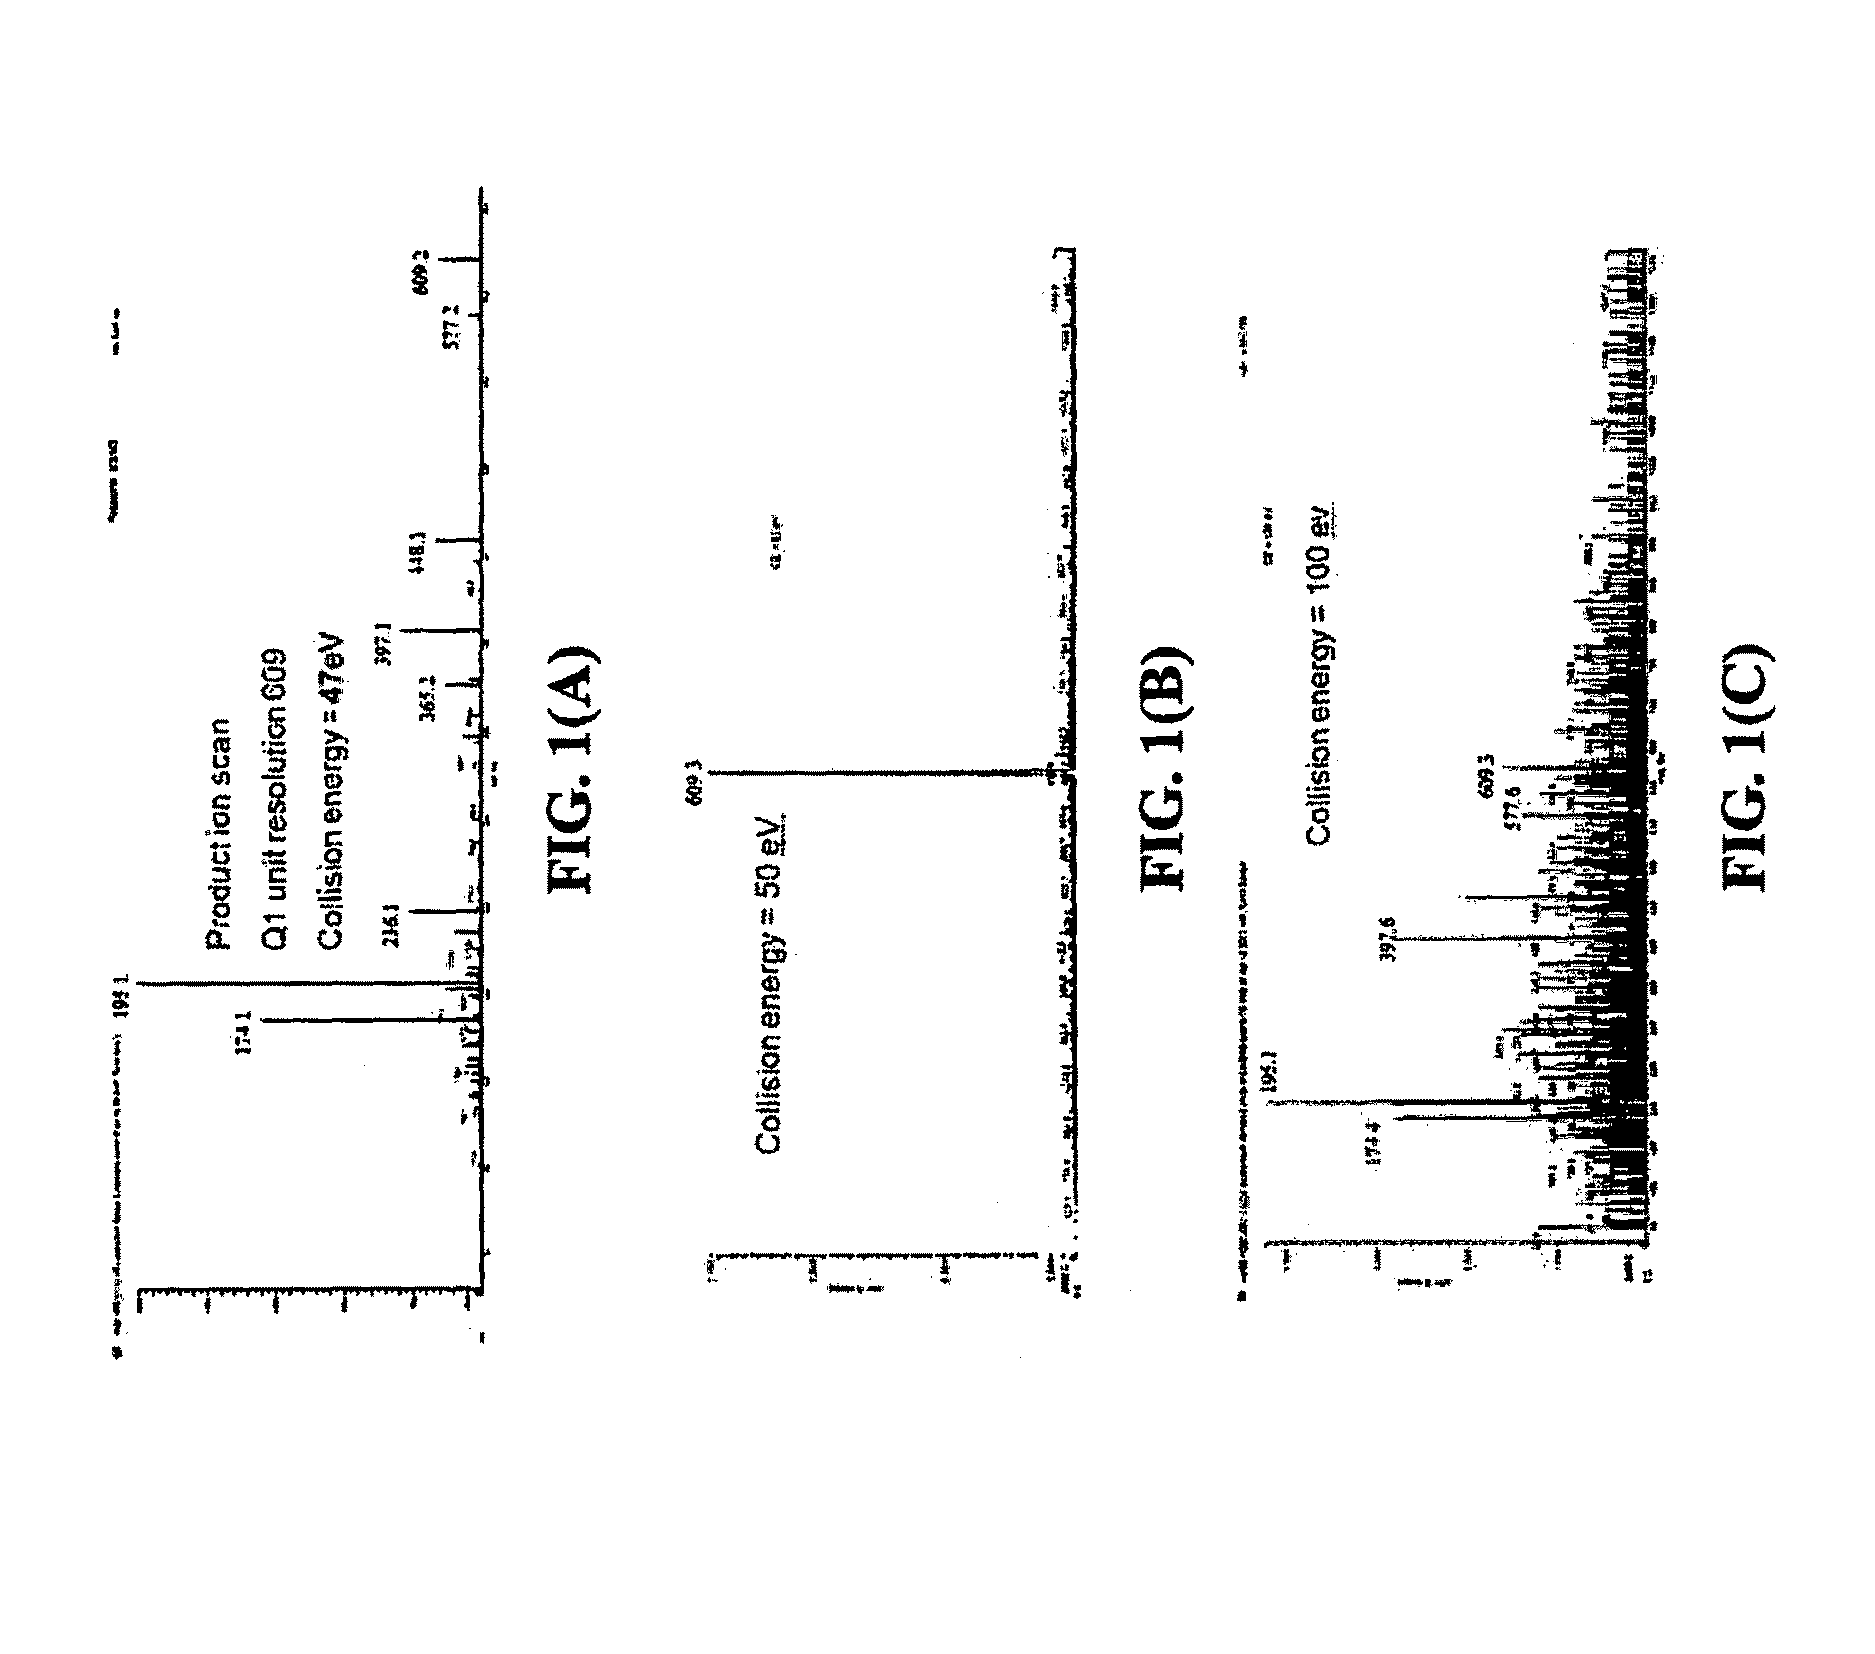 Contamination filter for mass spectrometer